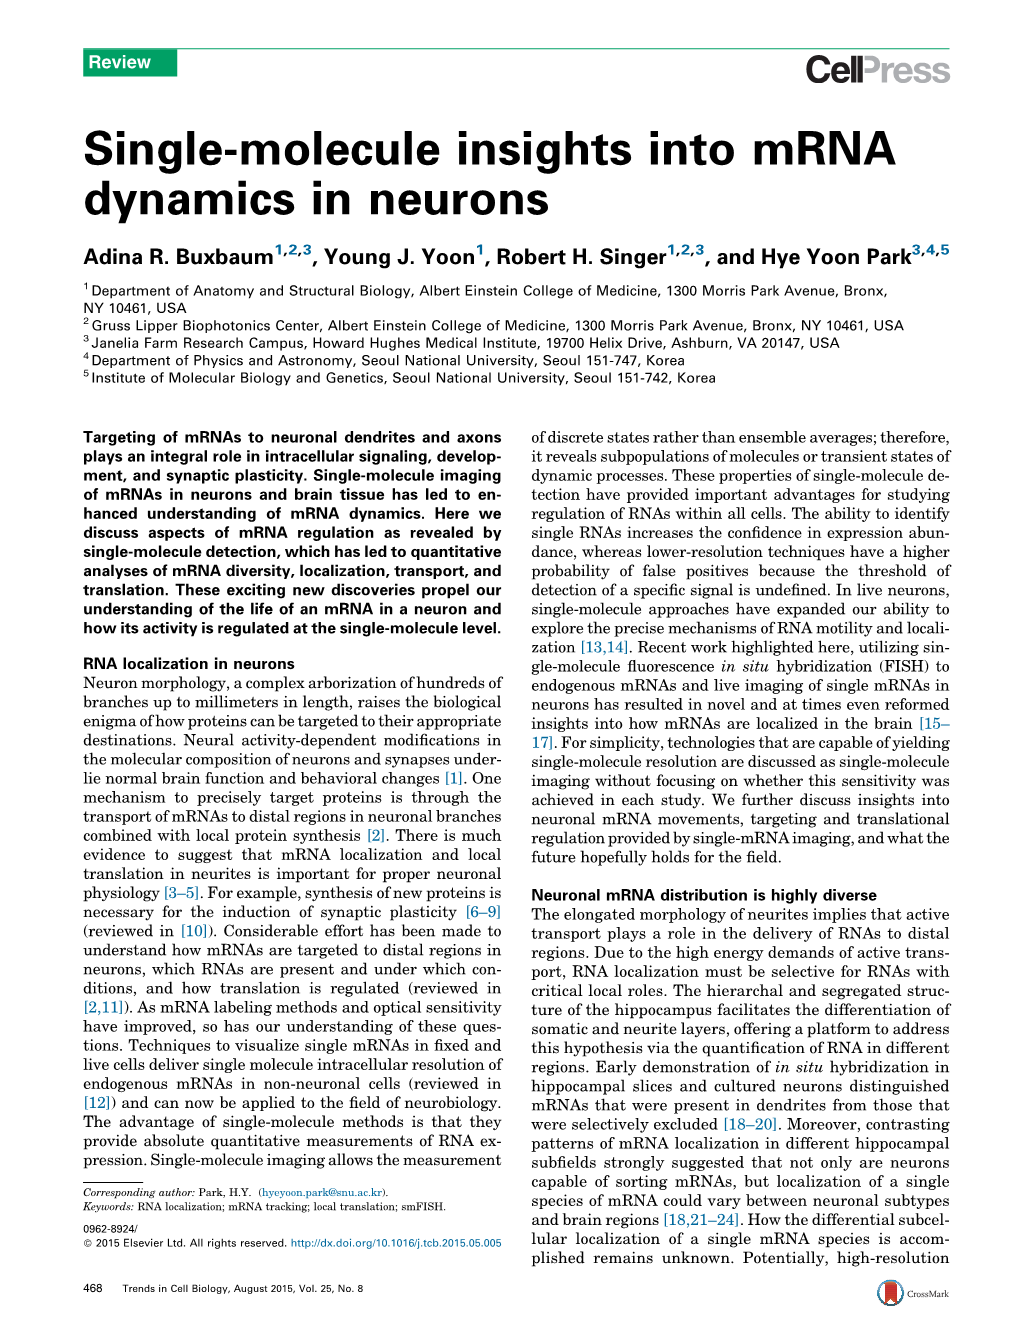 Single-Molecule Insights Into Mrna Dynamics in Neurons